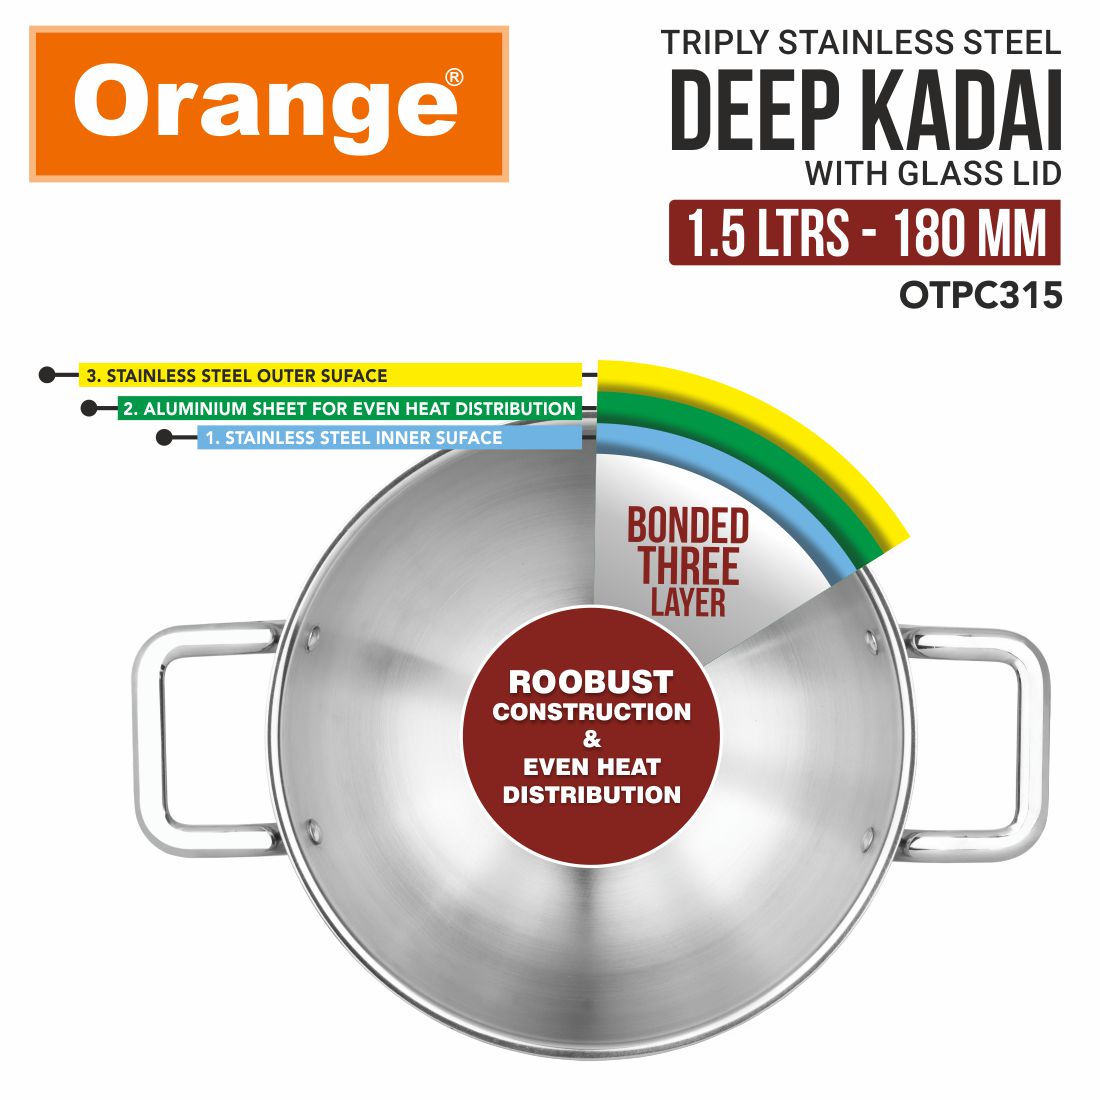 Orange Triply Stainless Steel Deep Kadai with Glass Lid